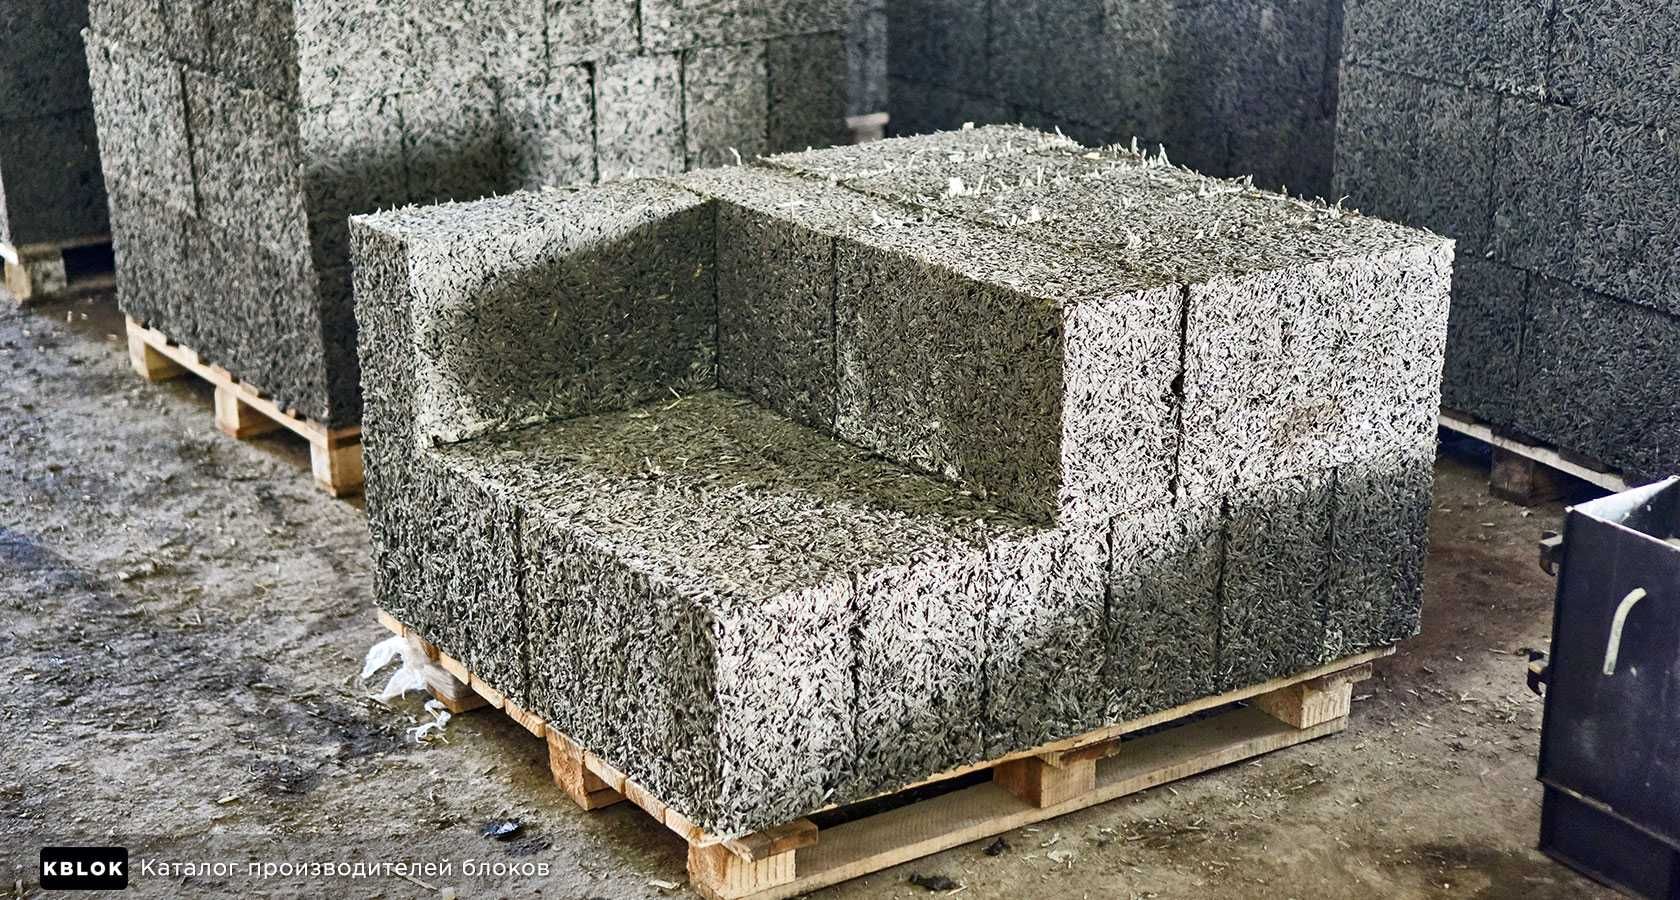 Арболит бетон блоки арболитовые блоки